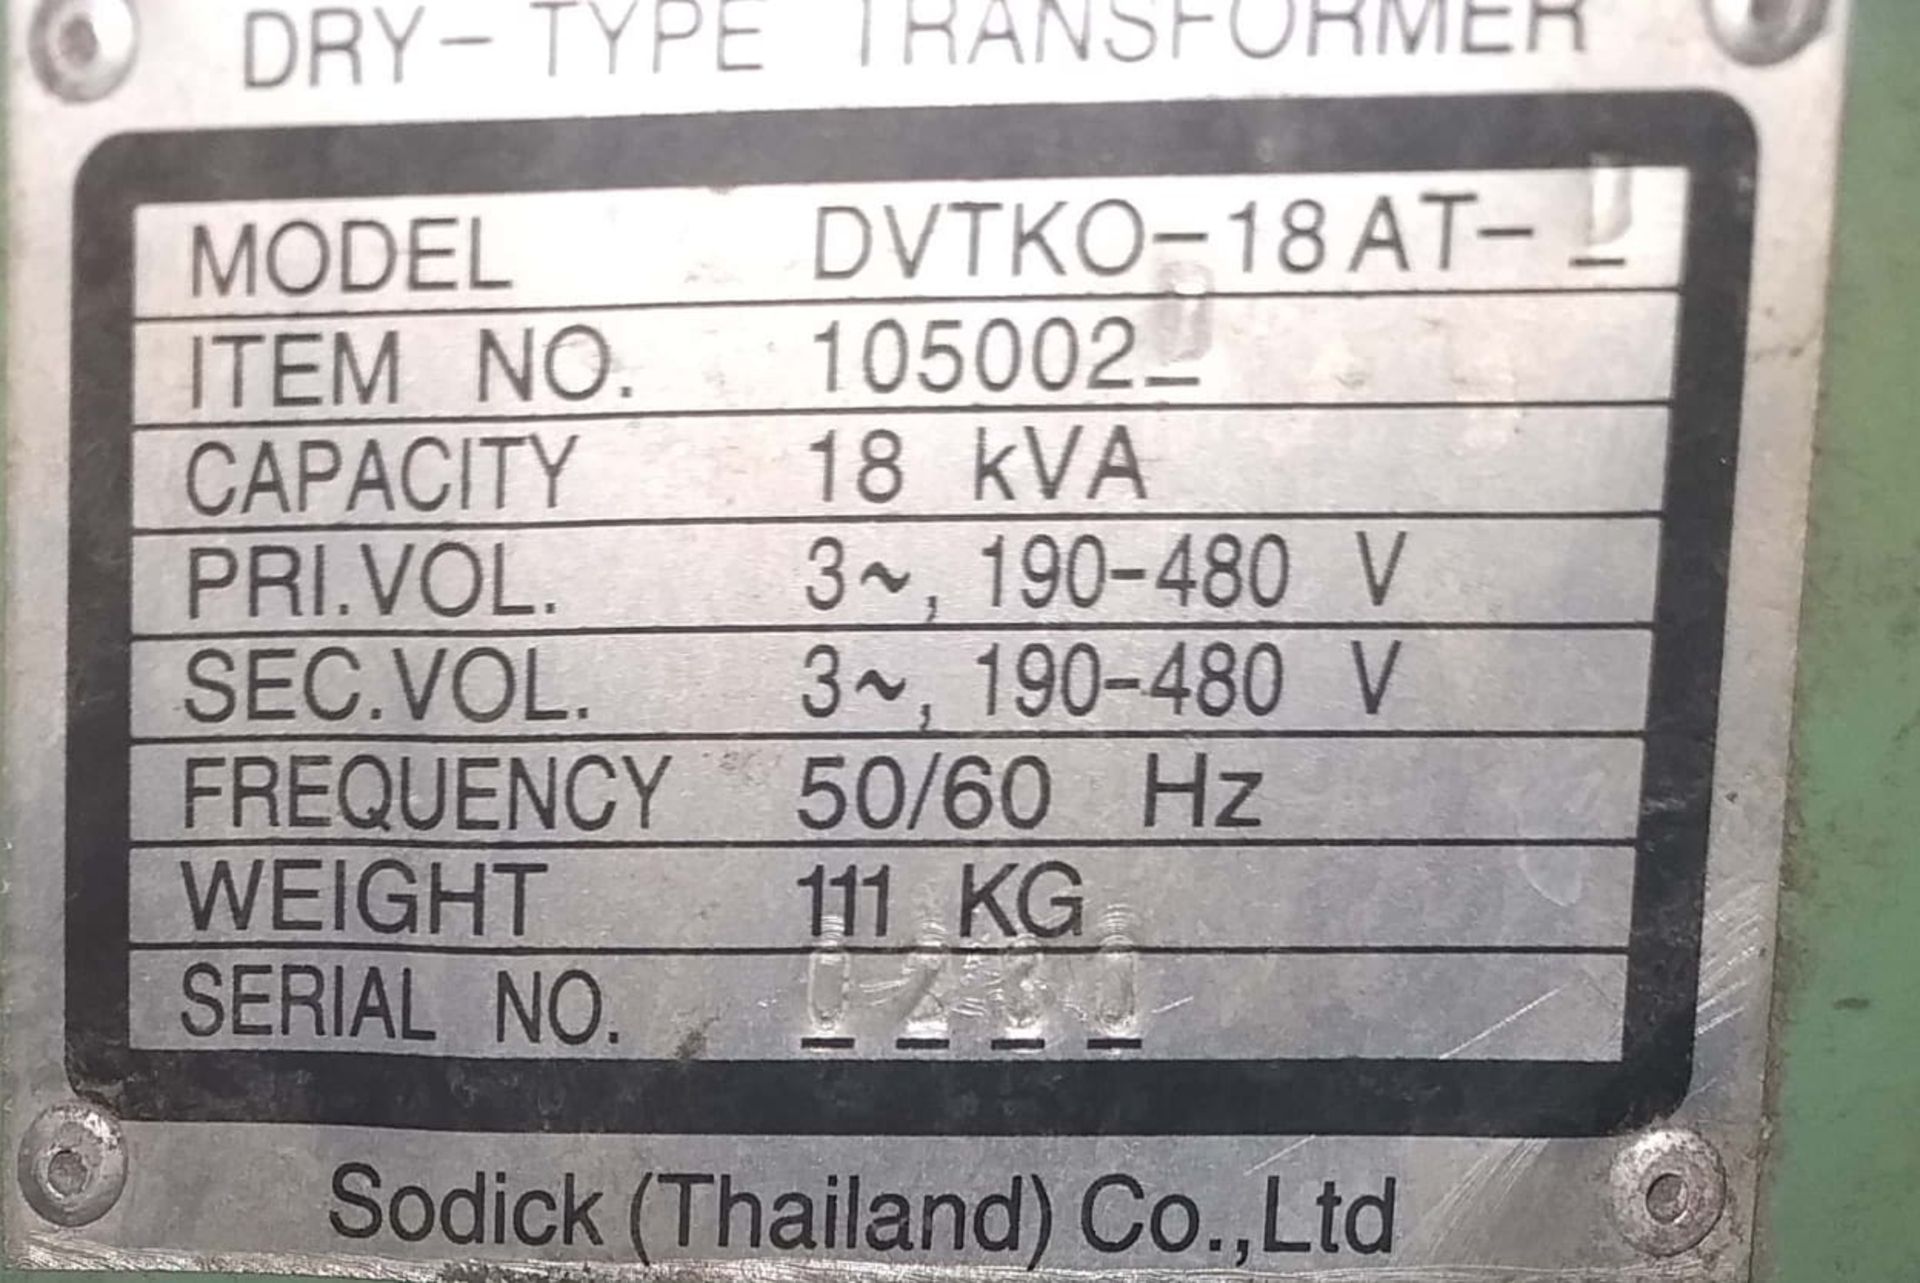 SODIC Dry Type Transformer, Capacity 18 KVA, 50-60 Hz, Weight 111 kgs., - Image 2 of 2